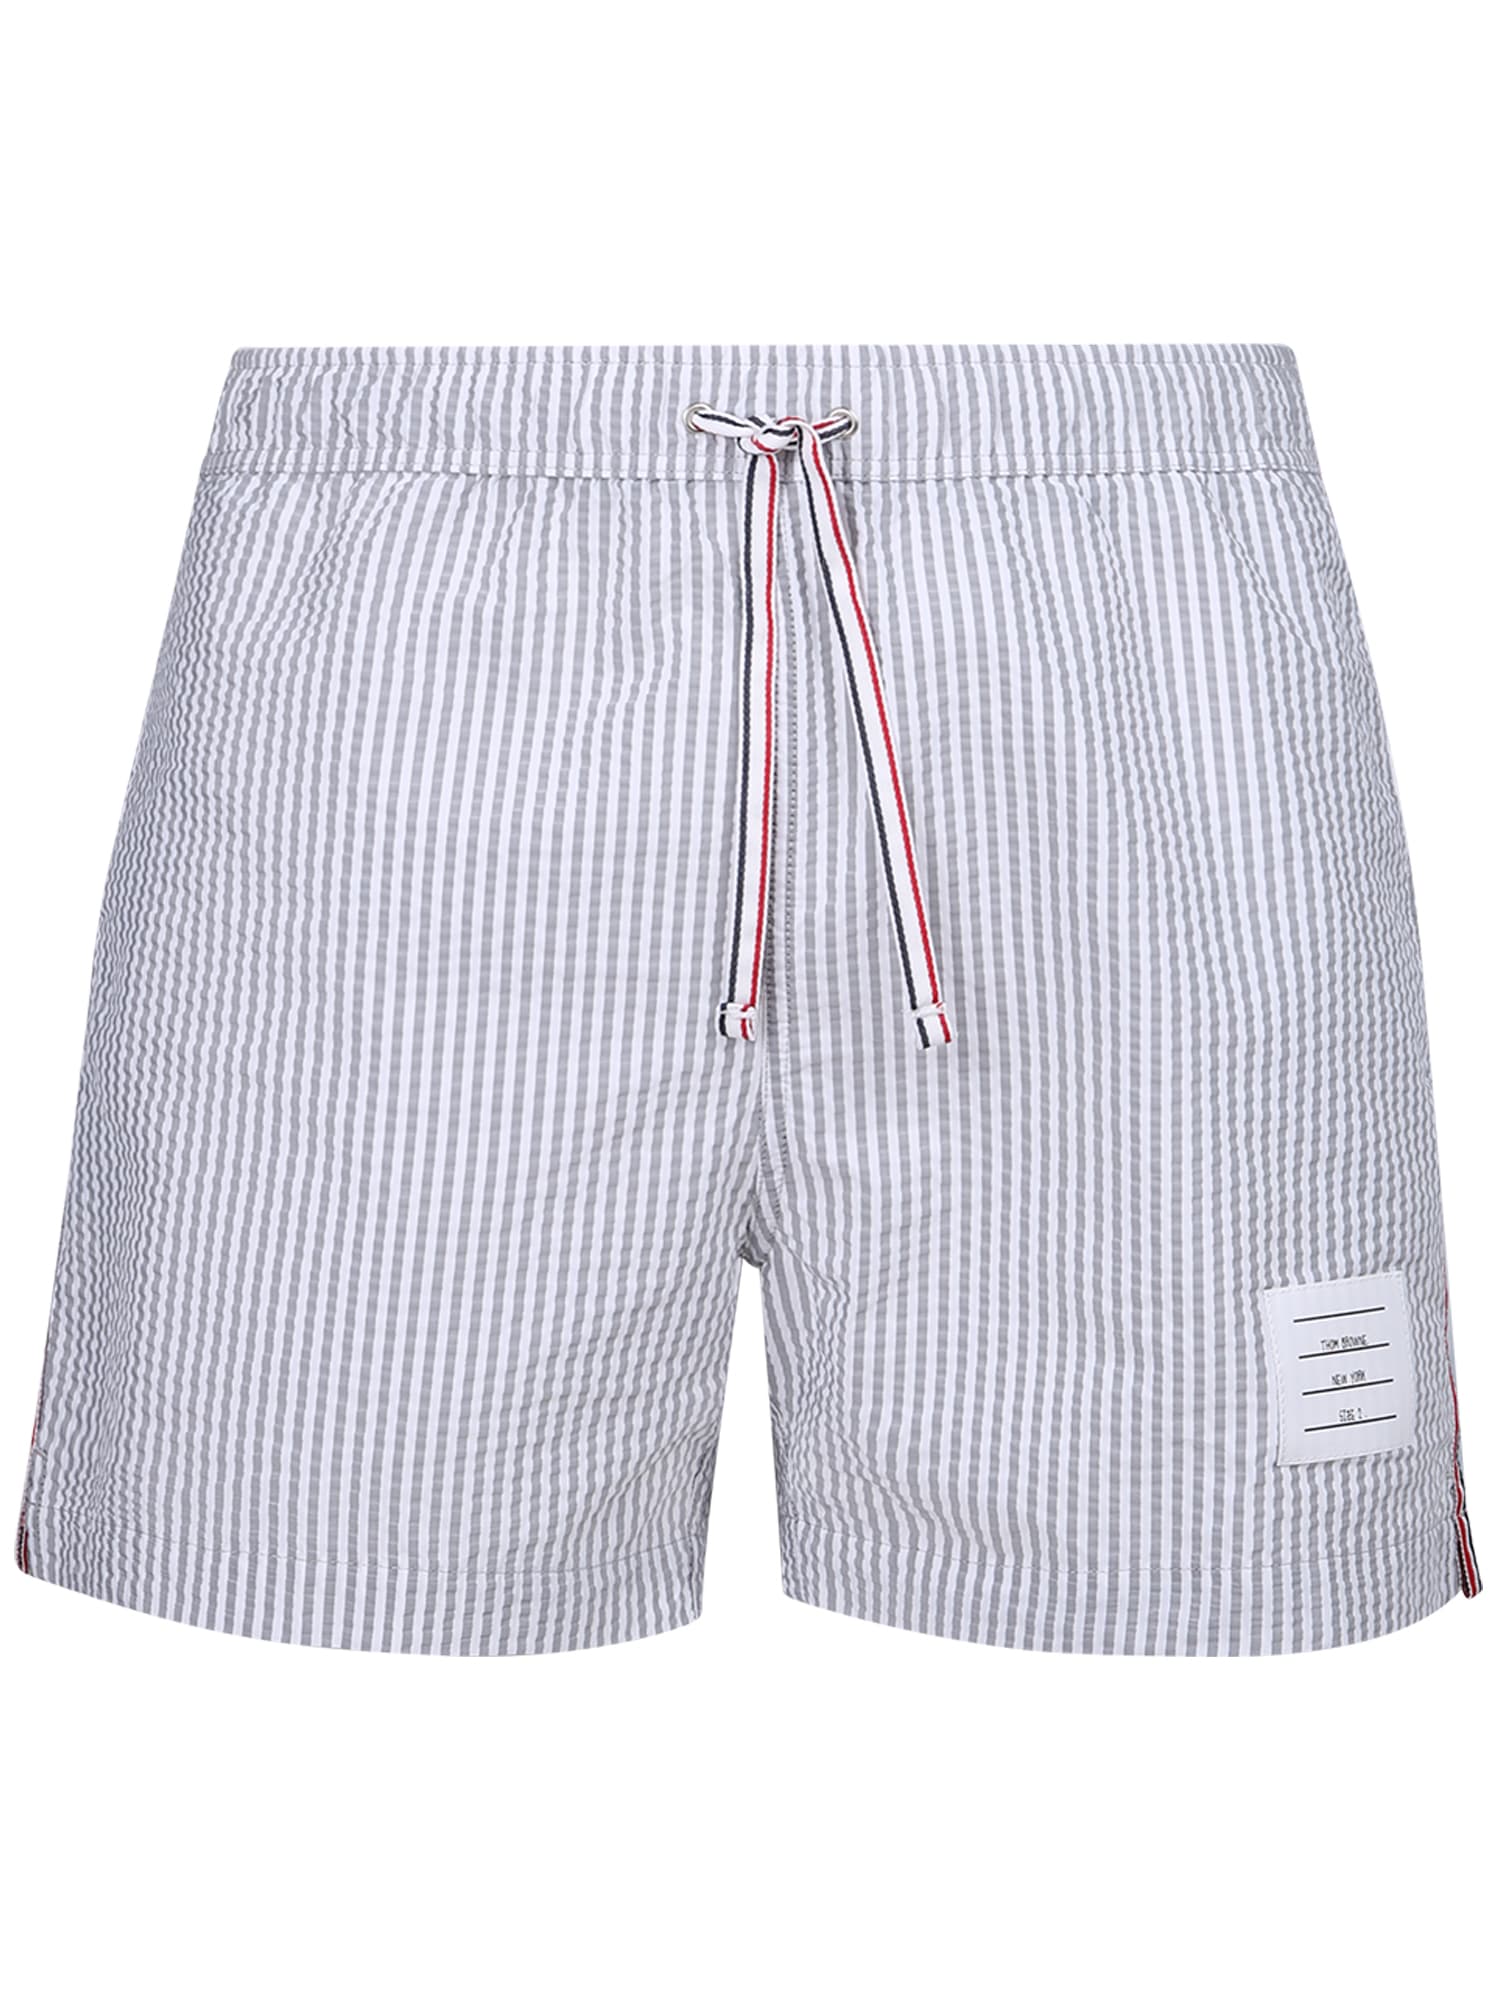 Thom Browne Striped Swim Shorts In Grey